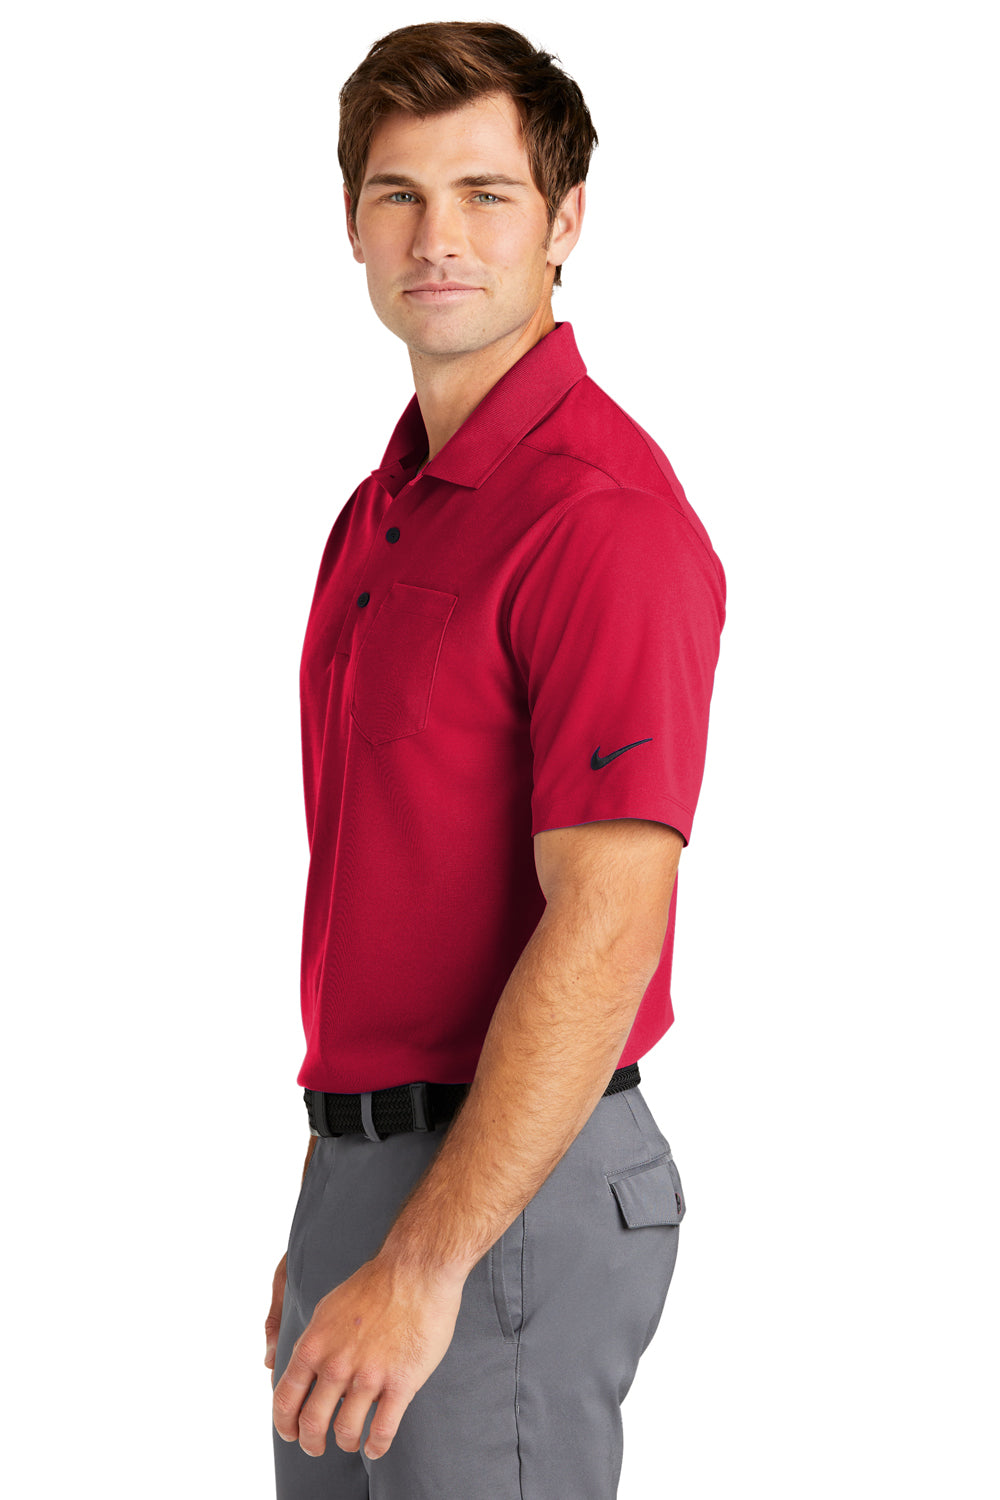 Nike NKDC2103 Mens Dri-Fit Moisture Wicking Micro Pique 2.0 Short Sleeve Polo Shirt w/ Pocket University Red Model Side